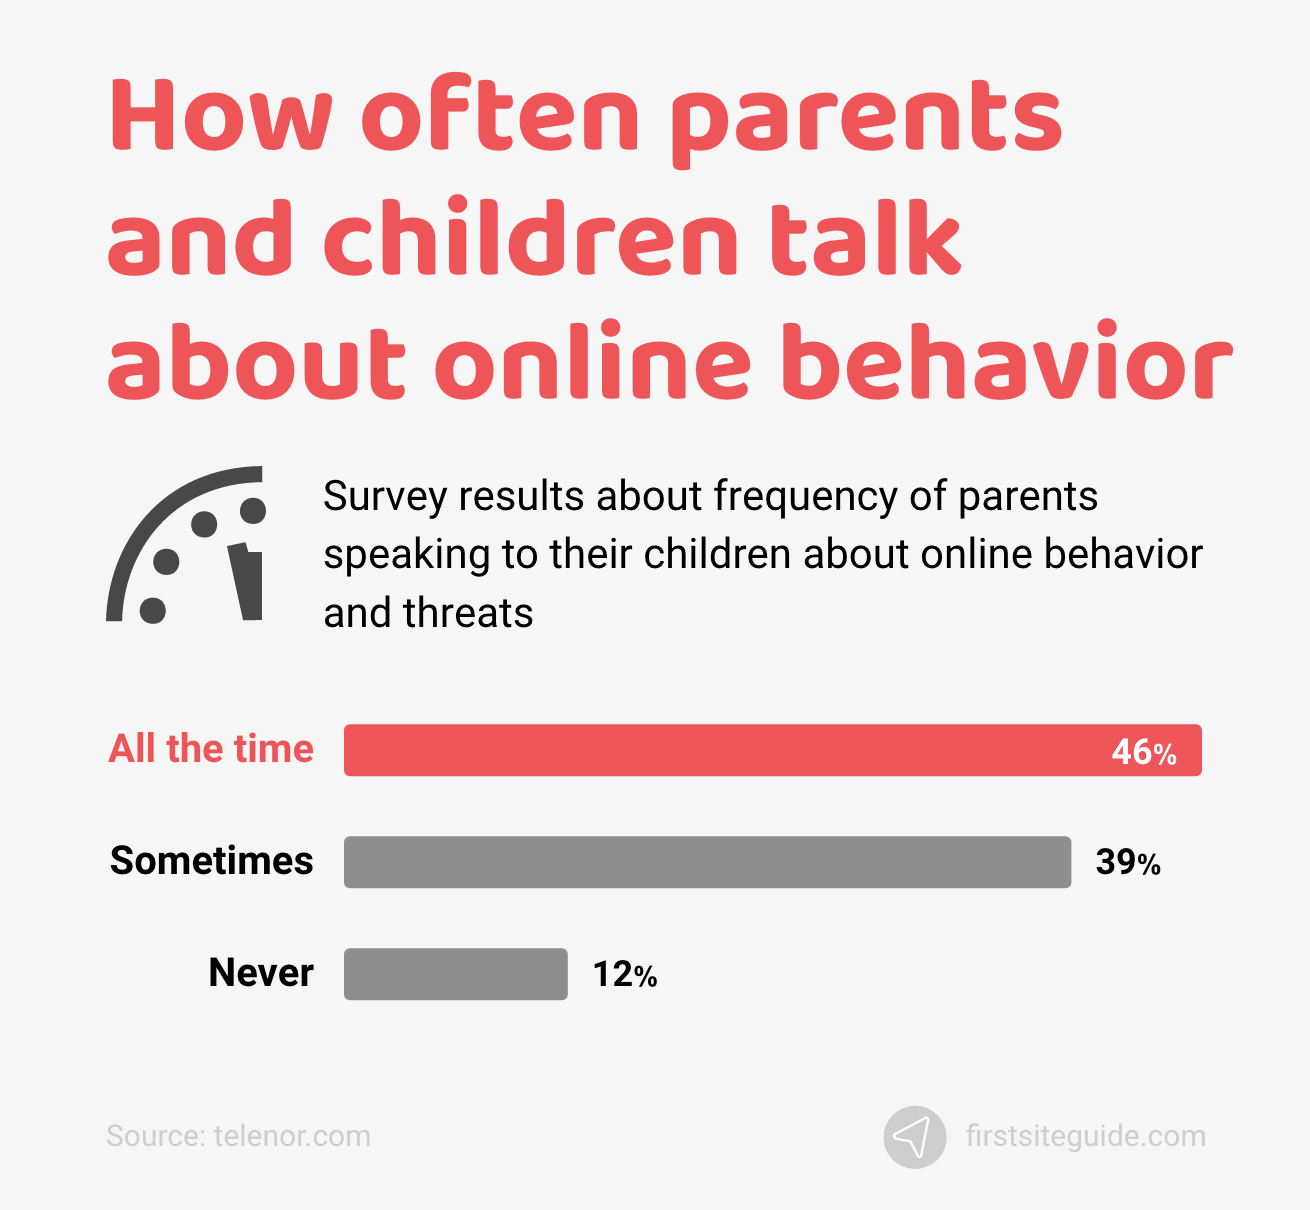 How often parents and children talk about online behavior